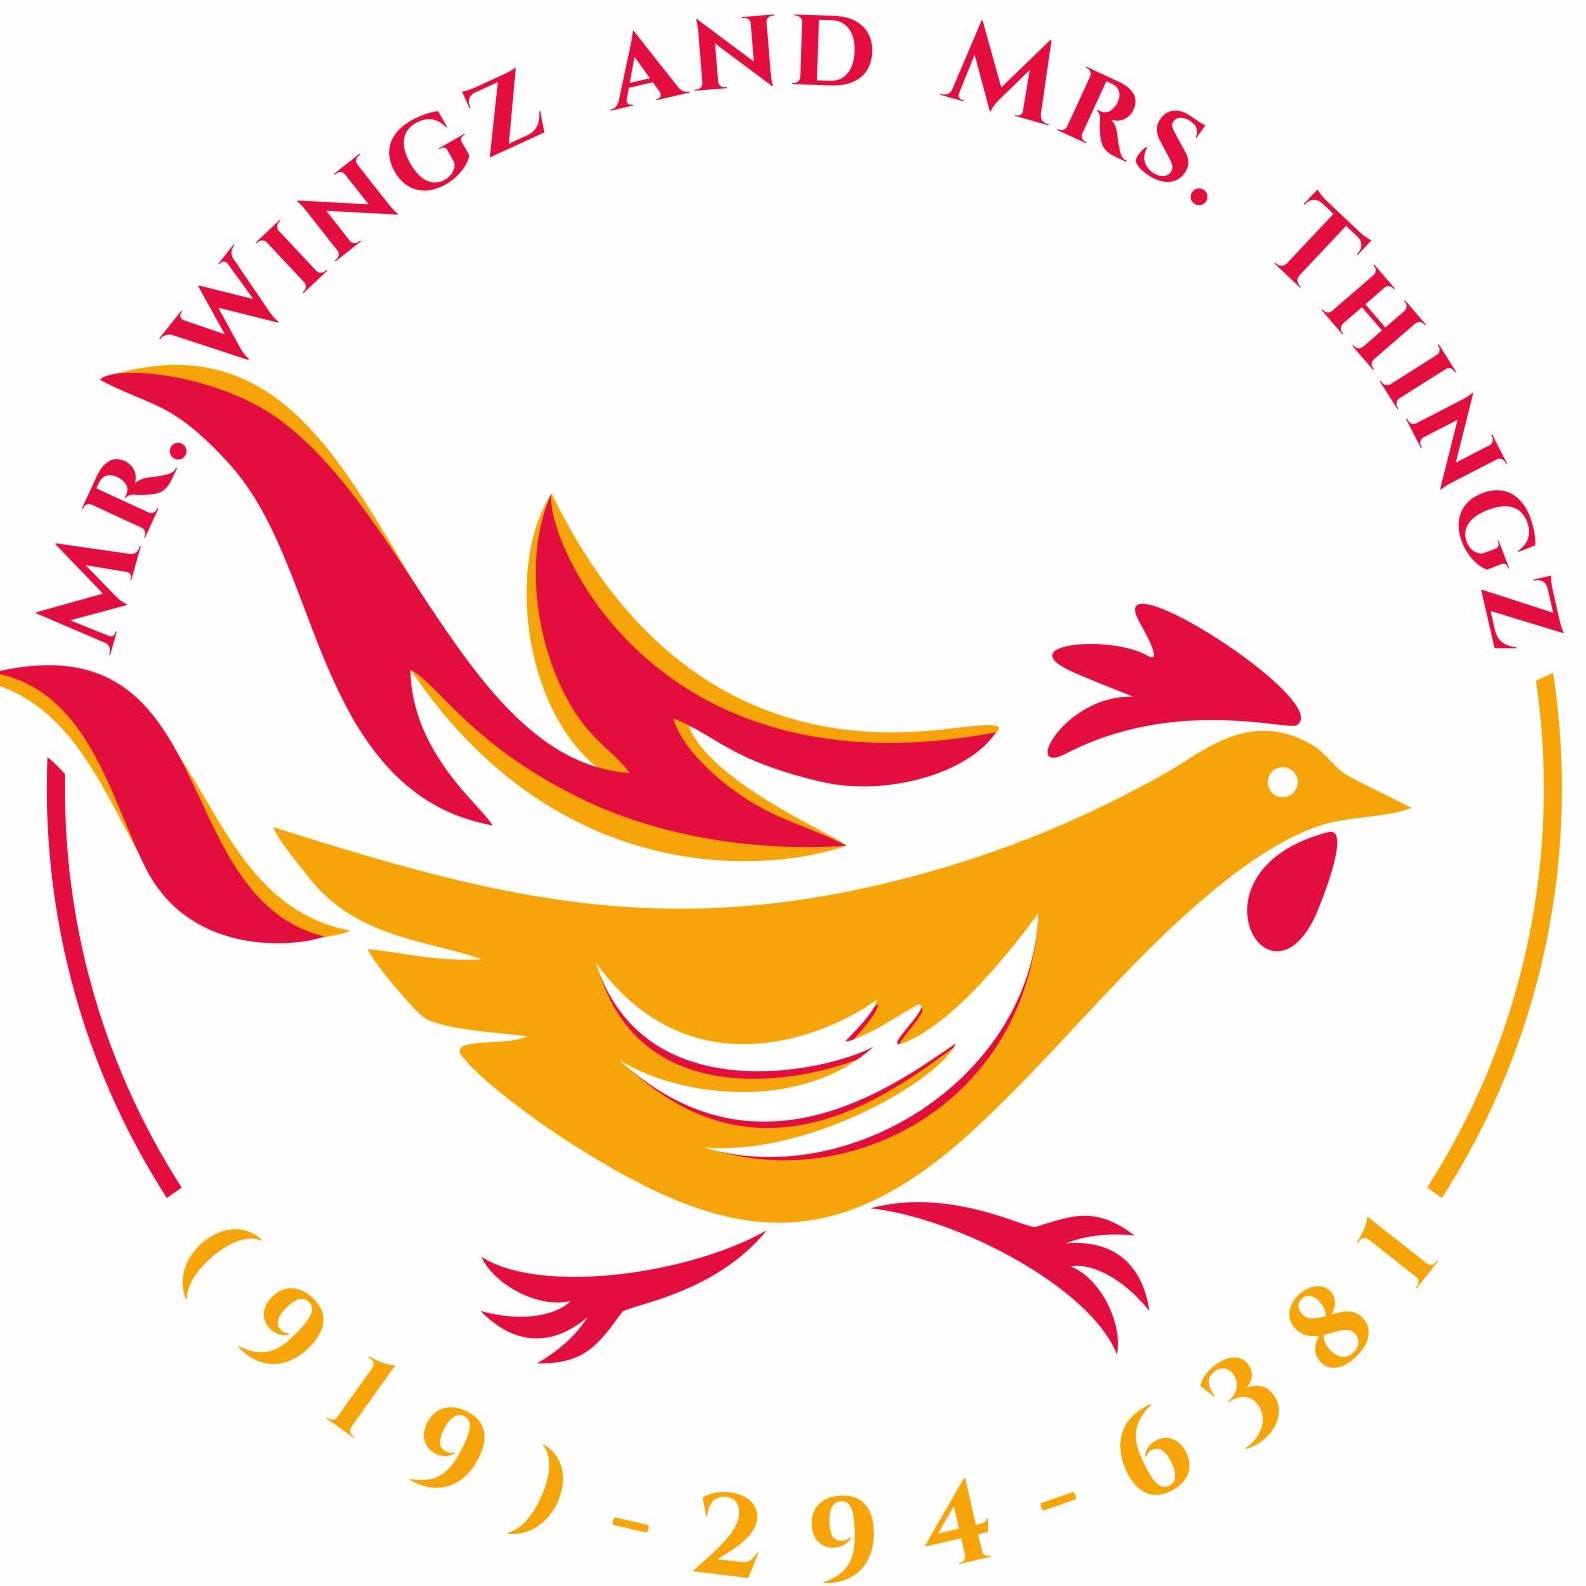 Mr. Wingz & Mrs. Thingz